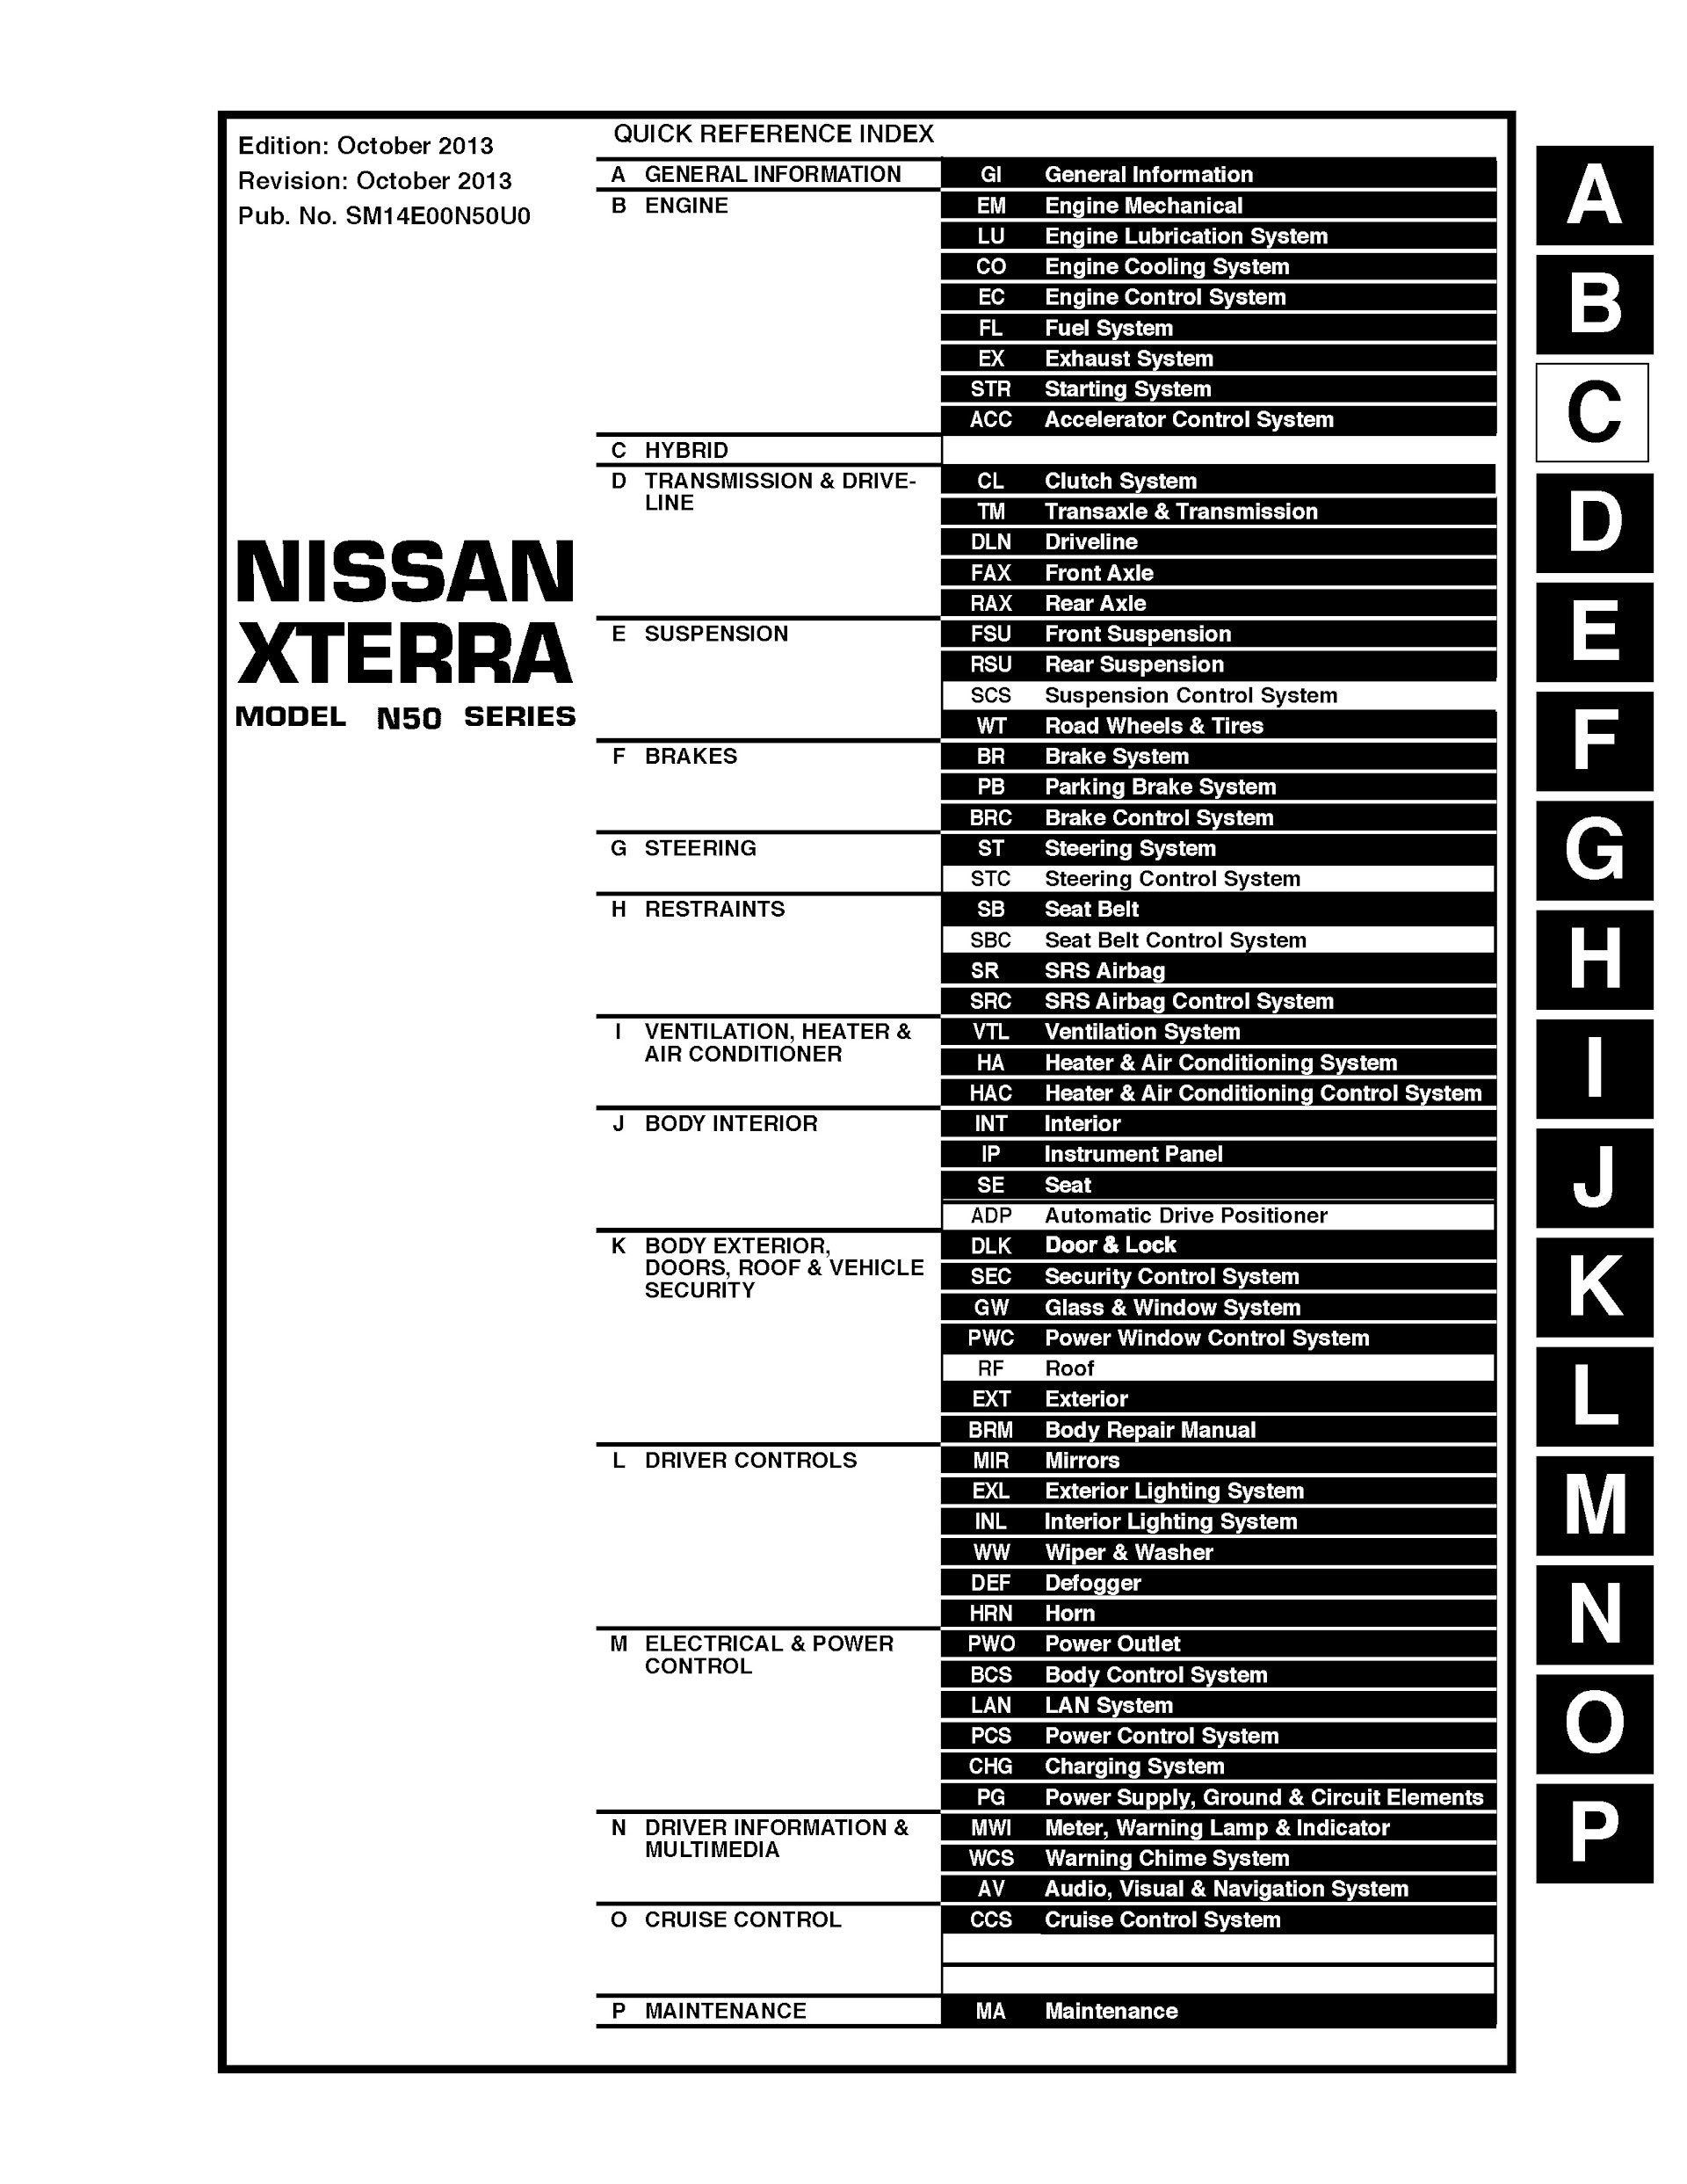 2014 Nissan Xterra Repair Manual, Model N50 Series